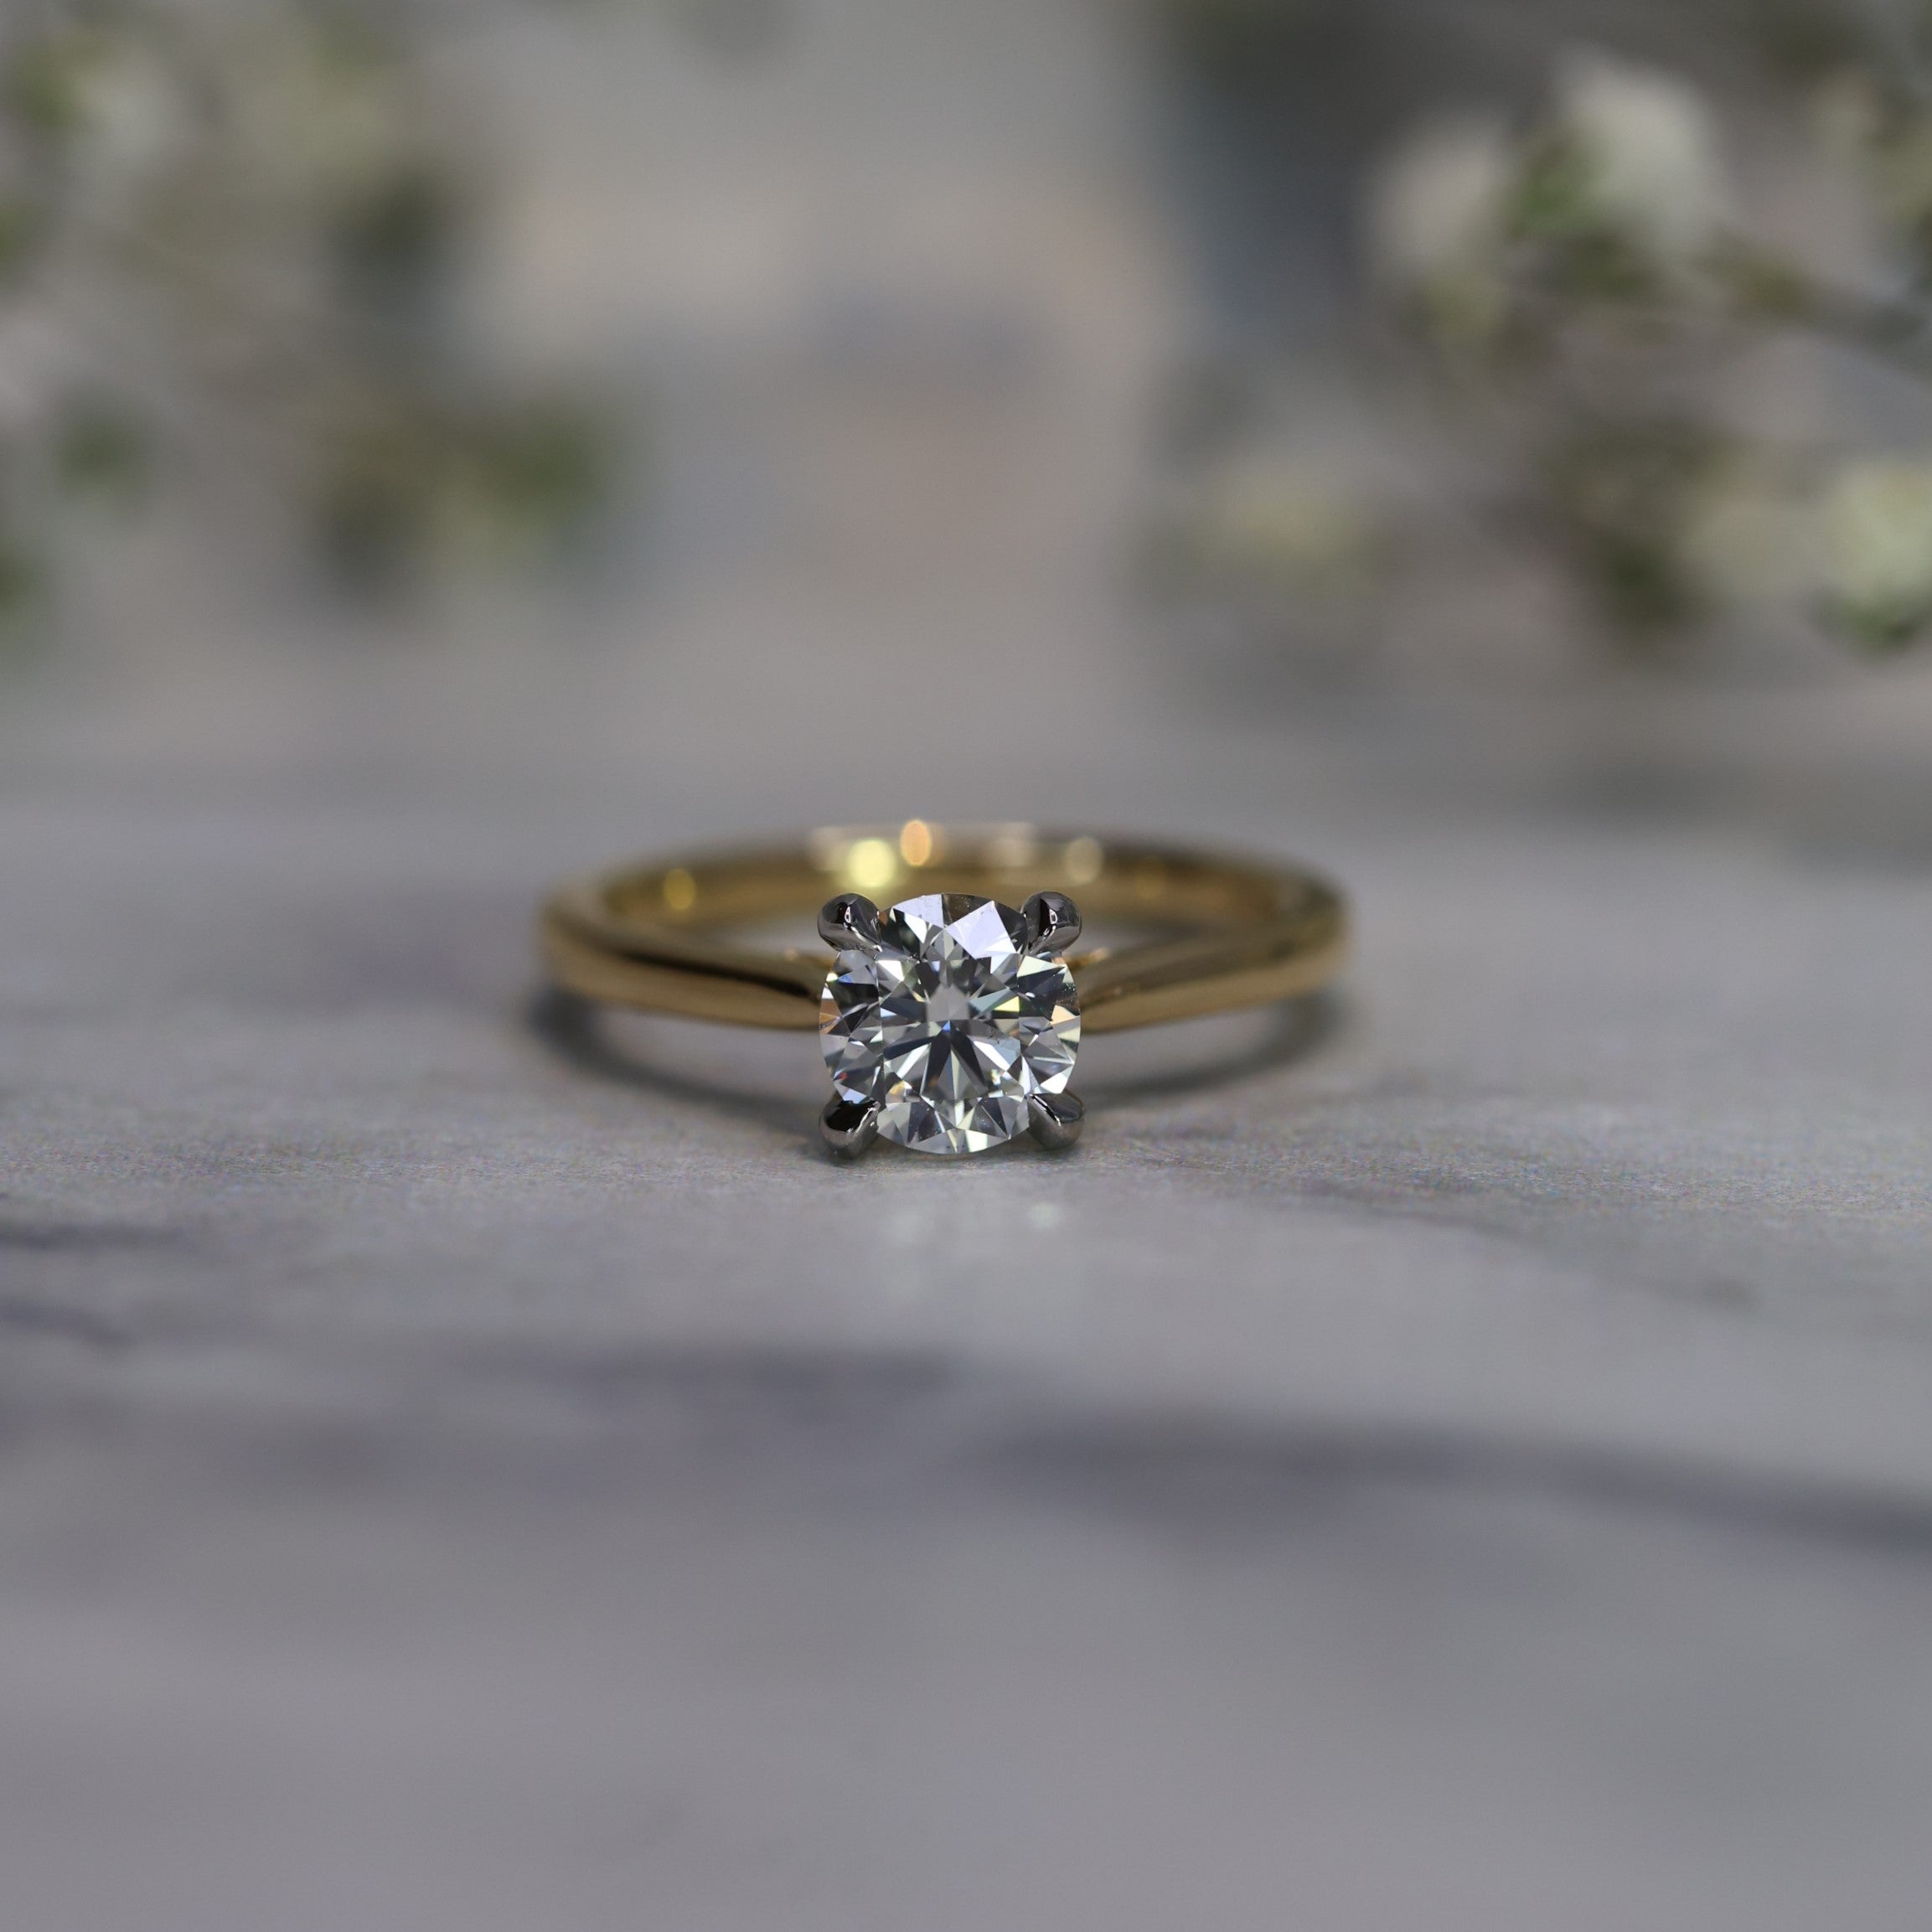 Buy White Gold Round Diamond Engagement Ring Online - Diamonds Factory  Ireland